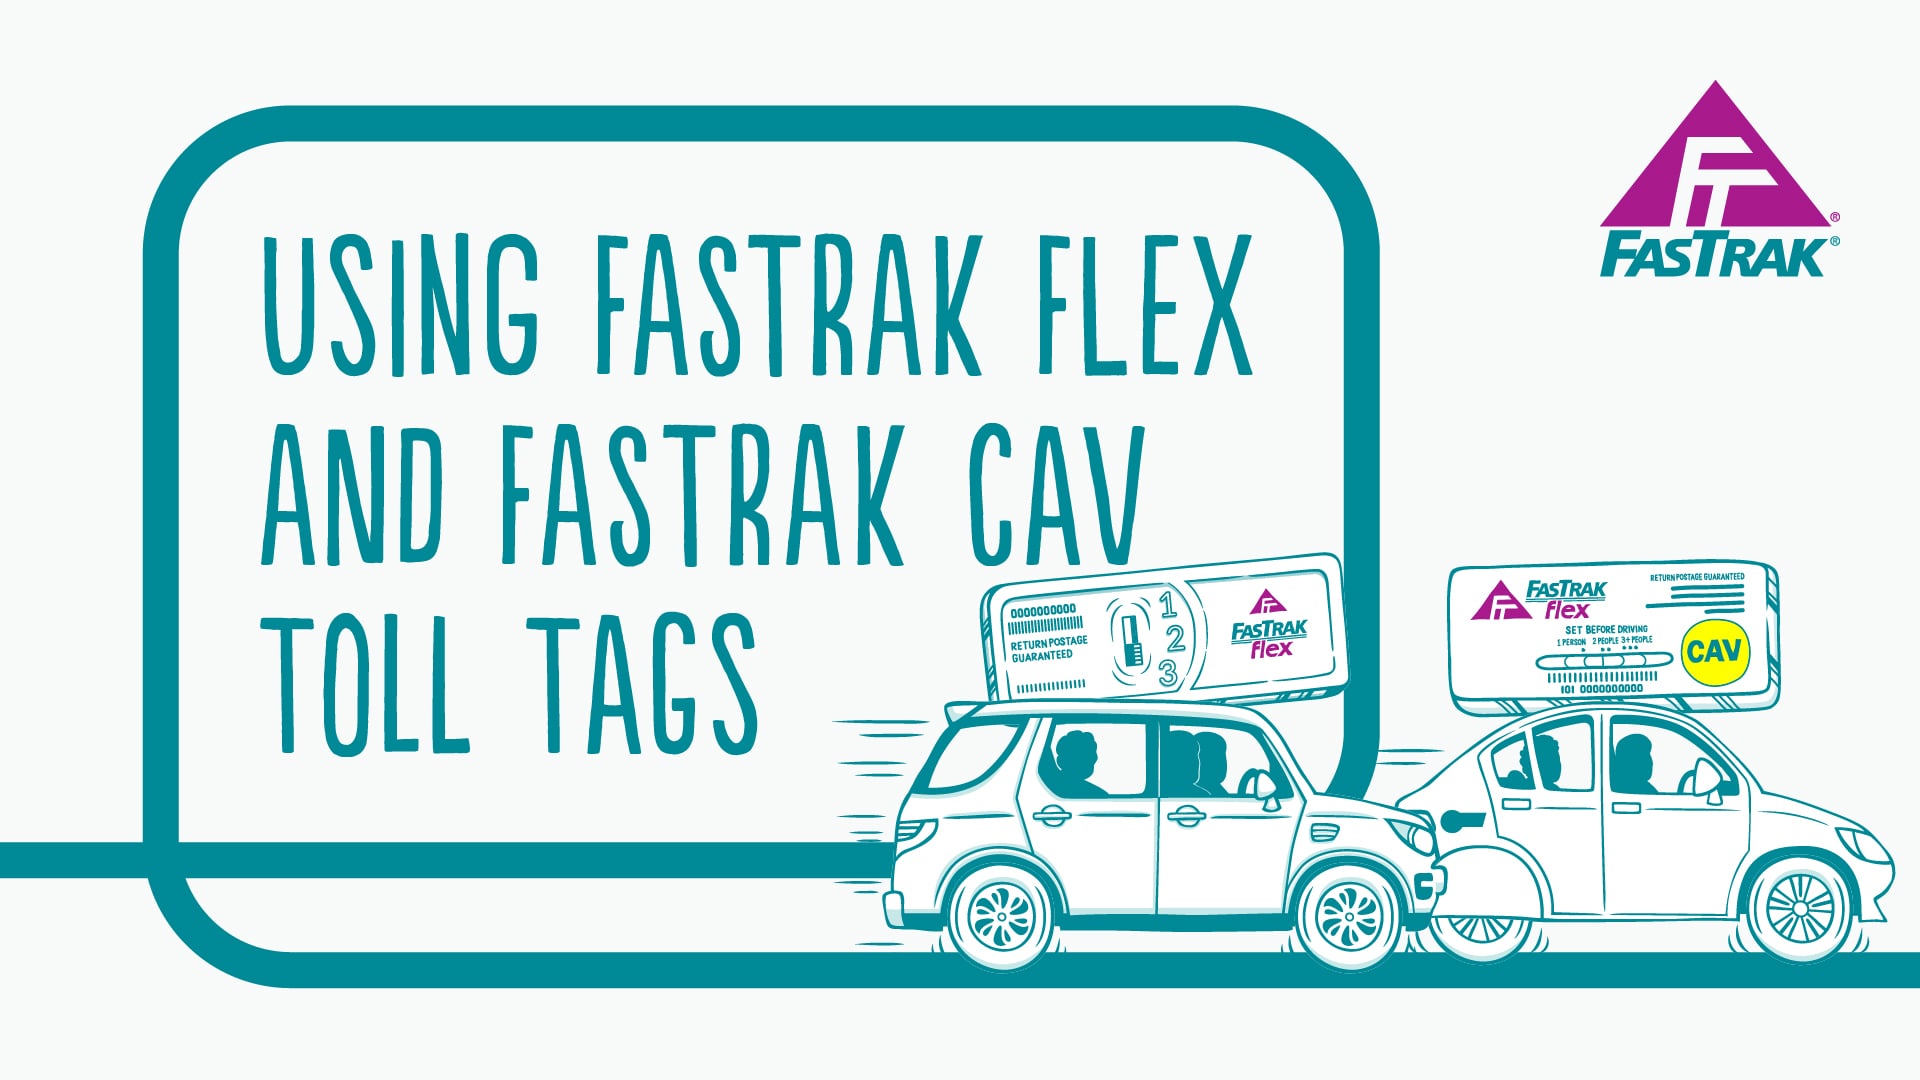 Using FasTrak Flex and FasTrak CAV Toll Tags on Vimeo